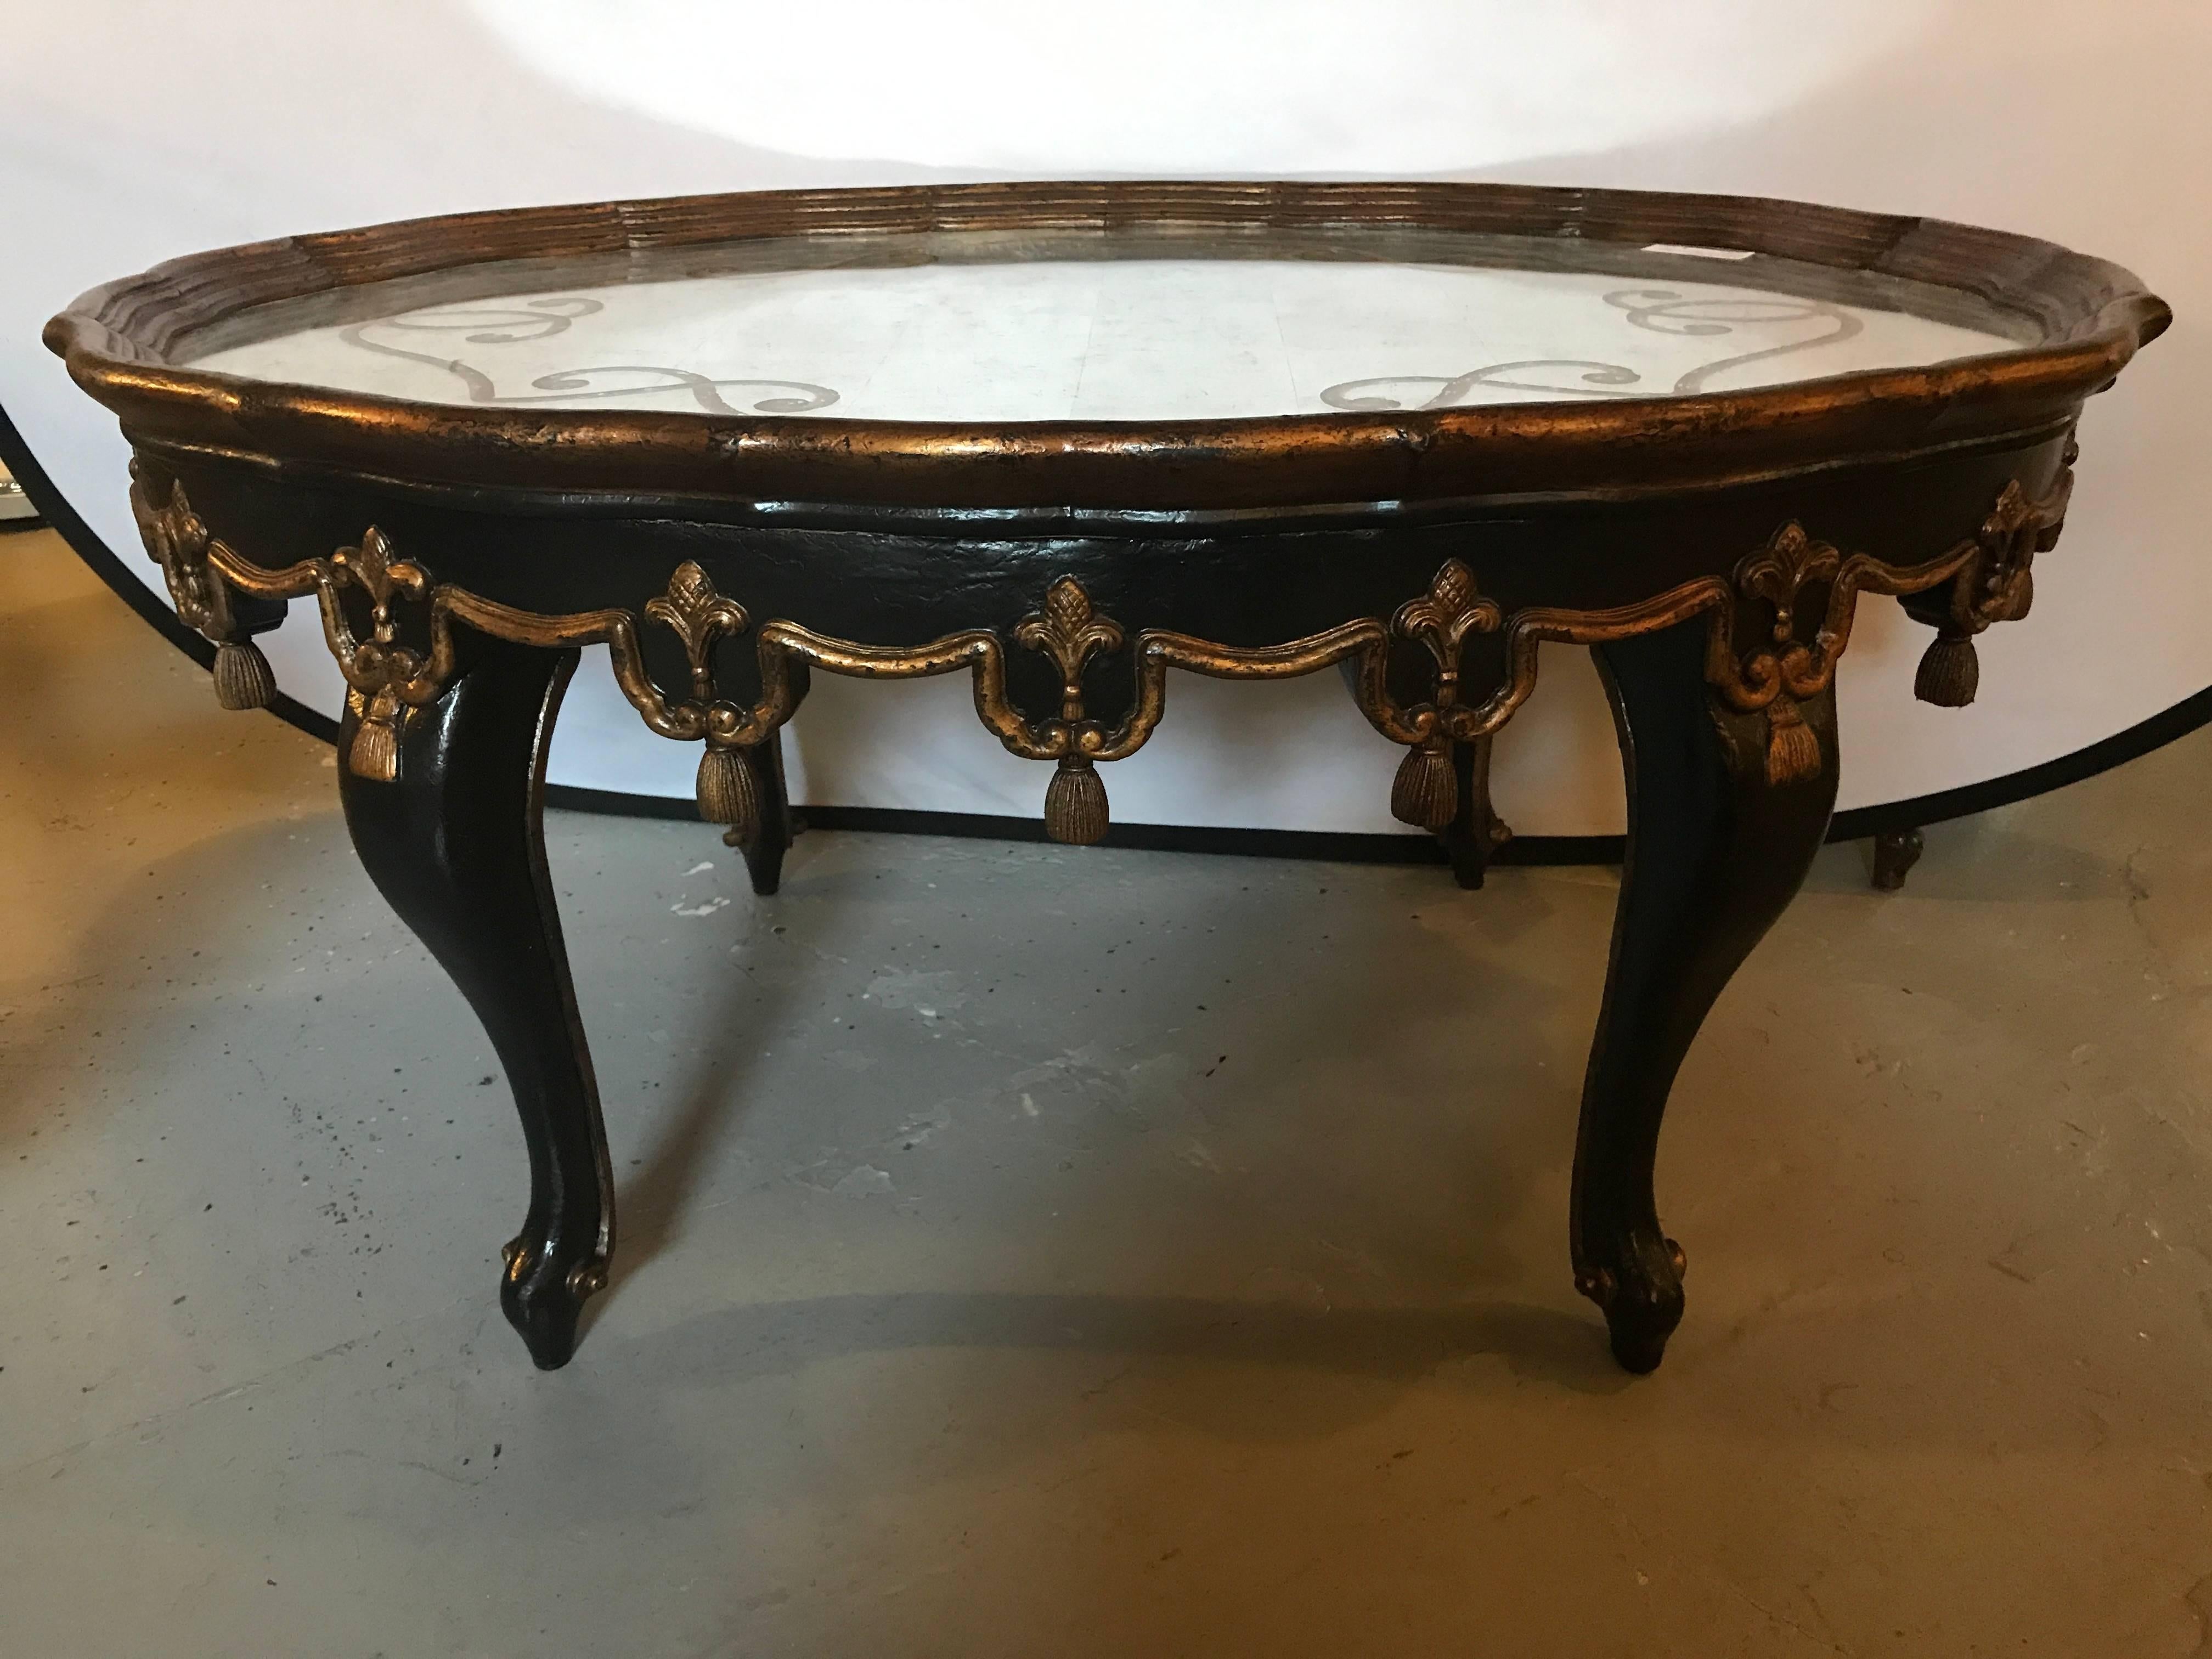 Hollywood Regency Louis XVI Fashioned Églomisé Mirror Top Coffee Table with Ebony and Gilt Base